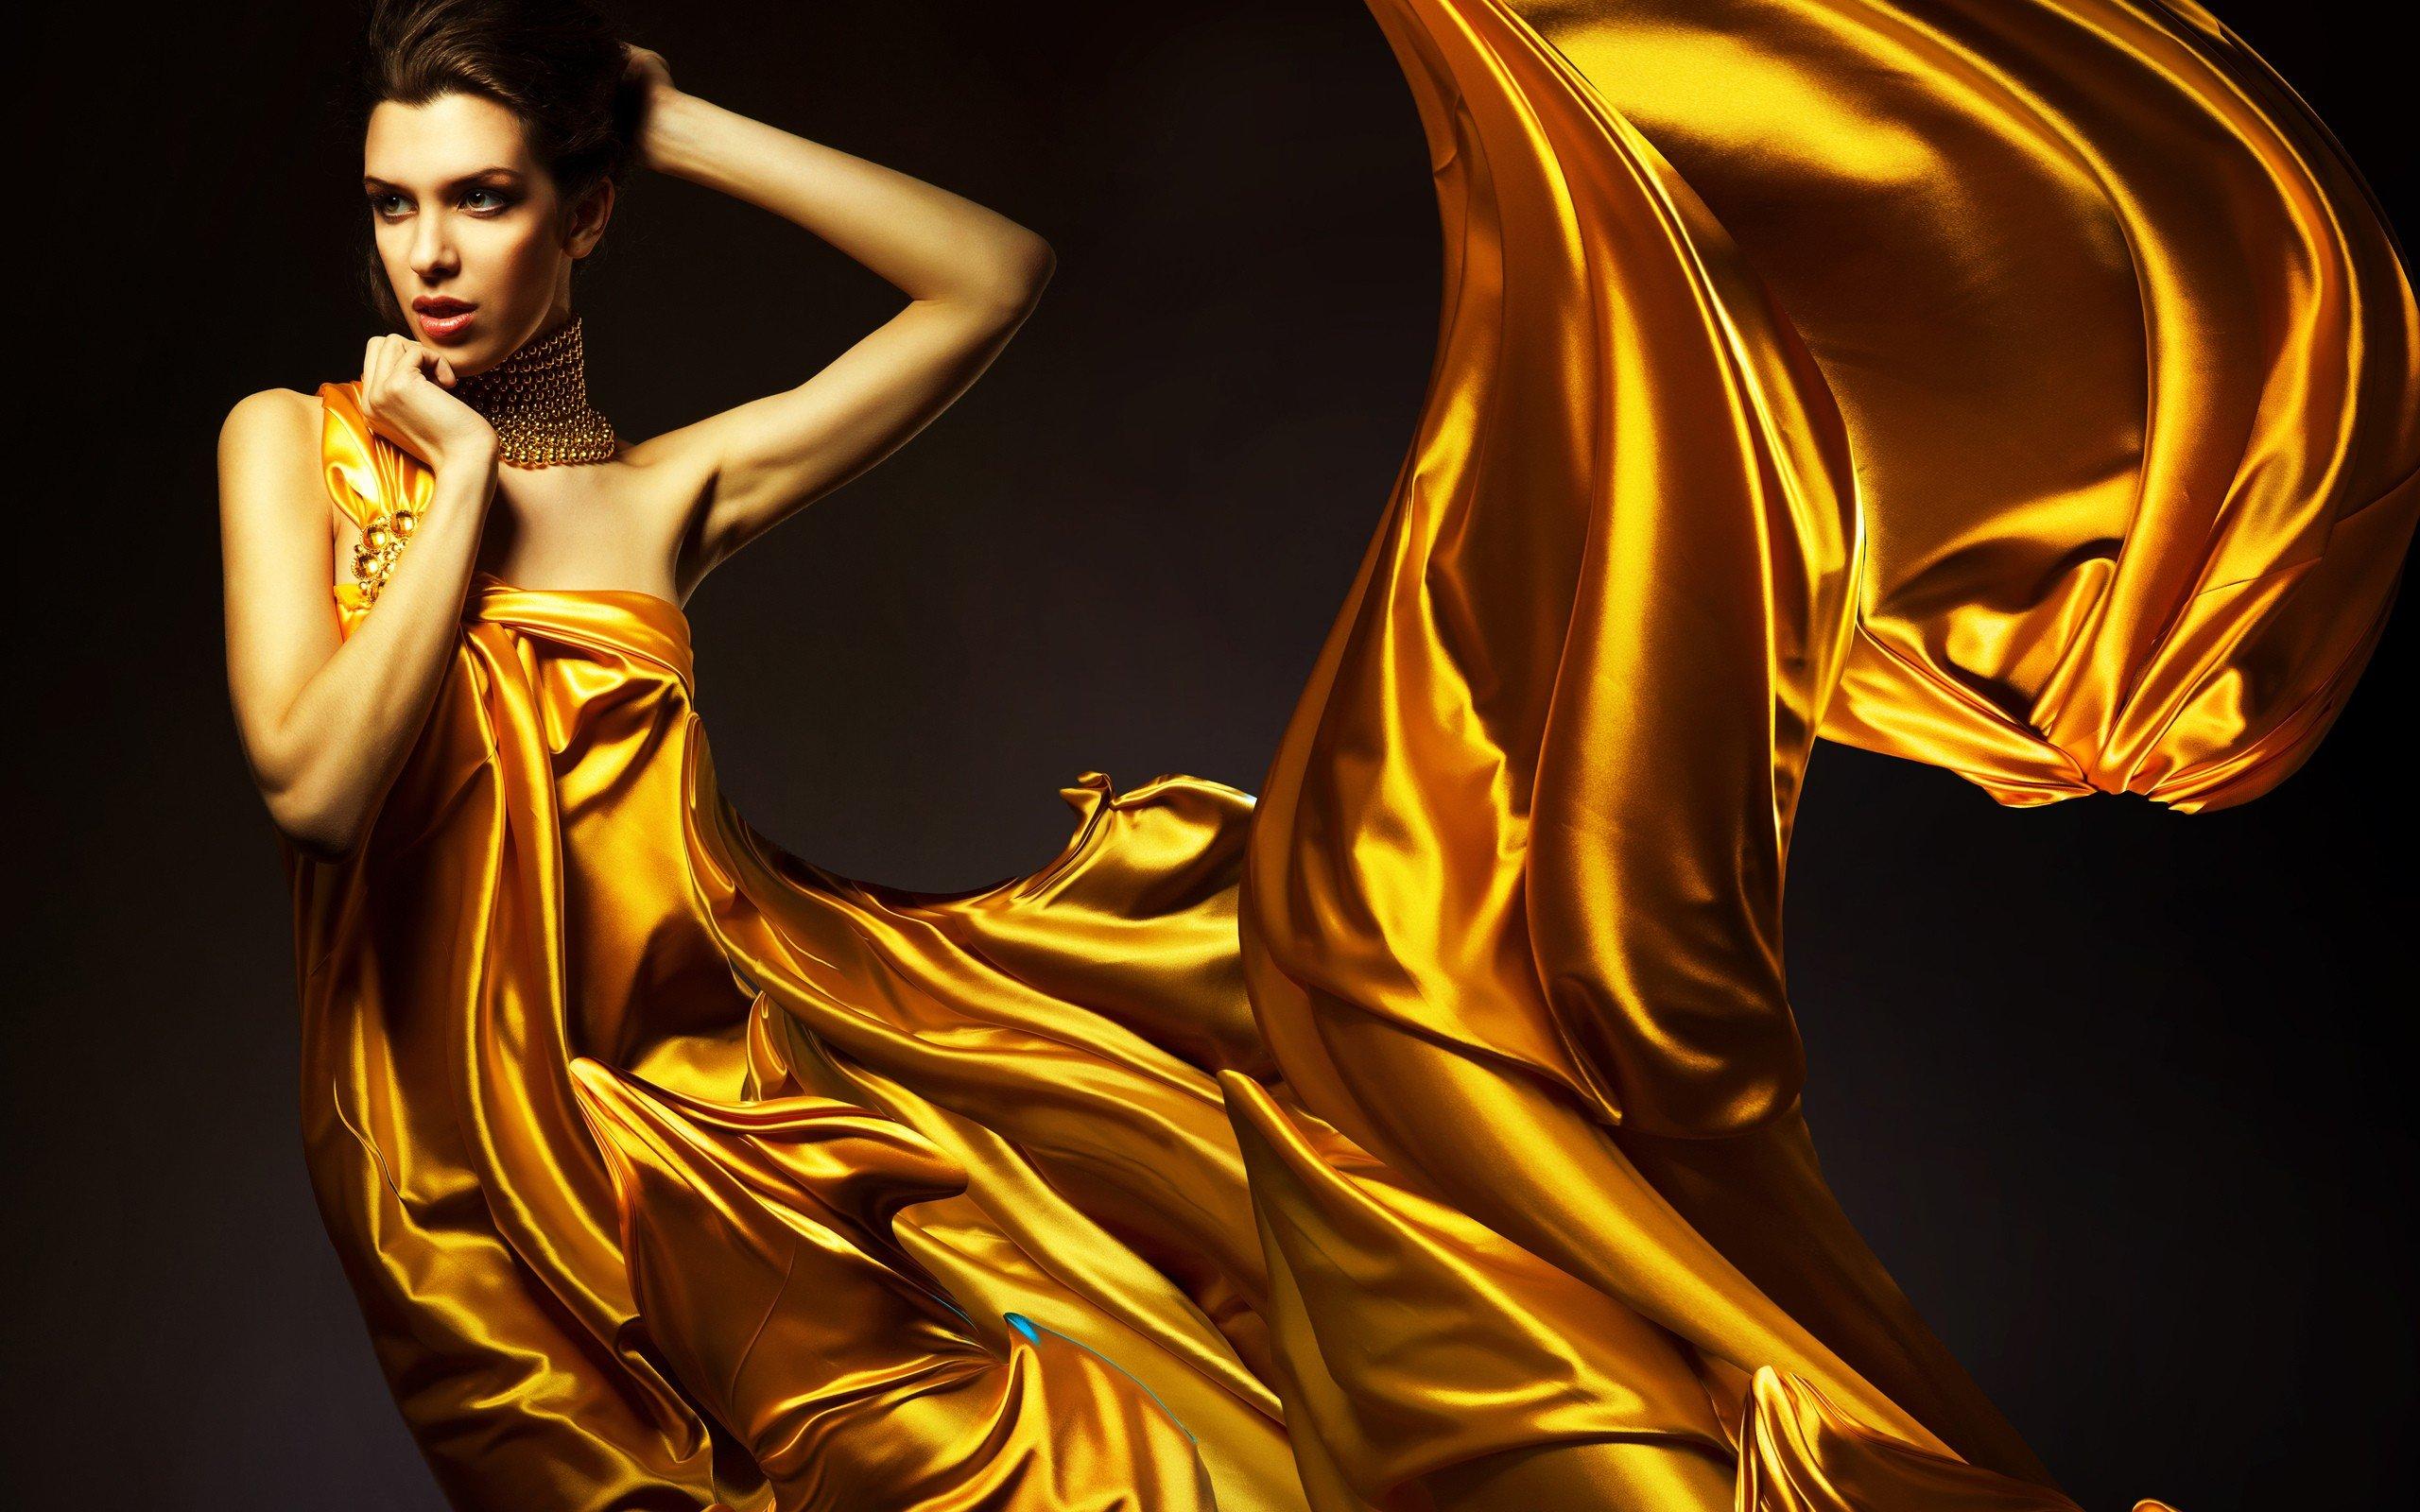 Women fashion jewelry golden dress hair up fabric wallpaper